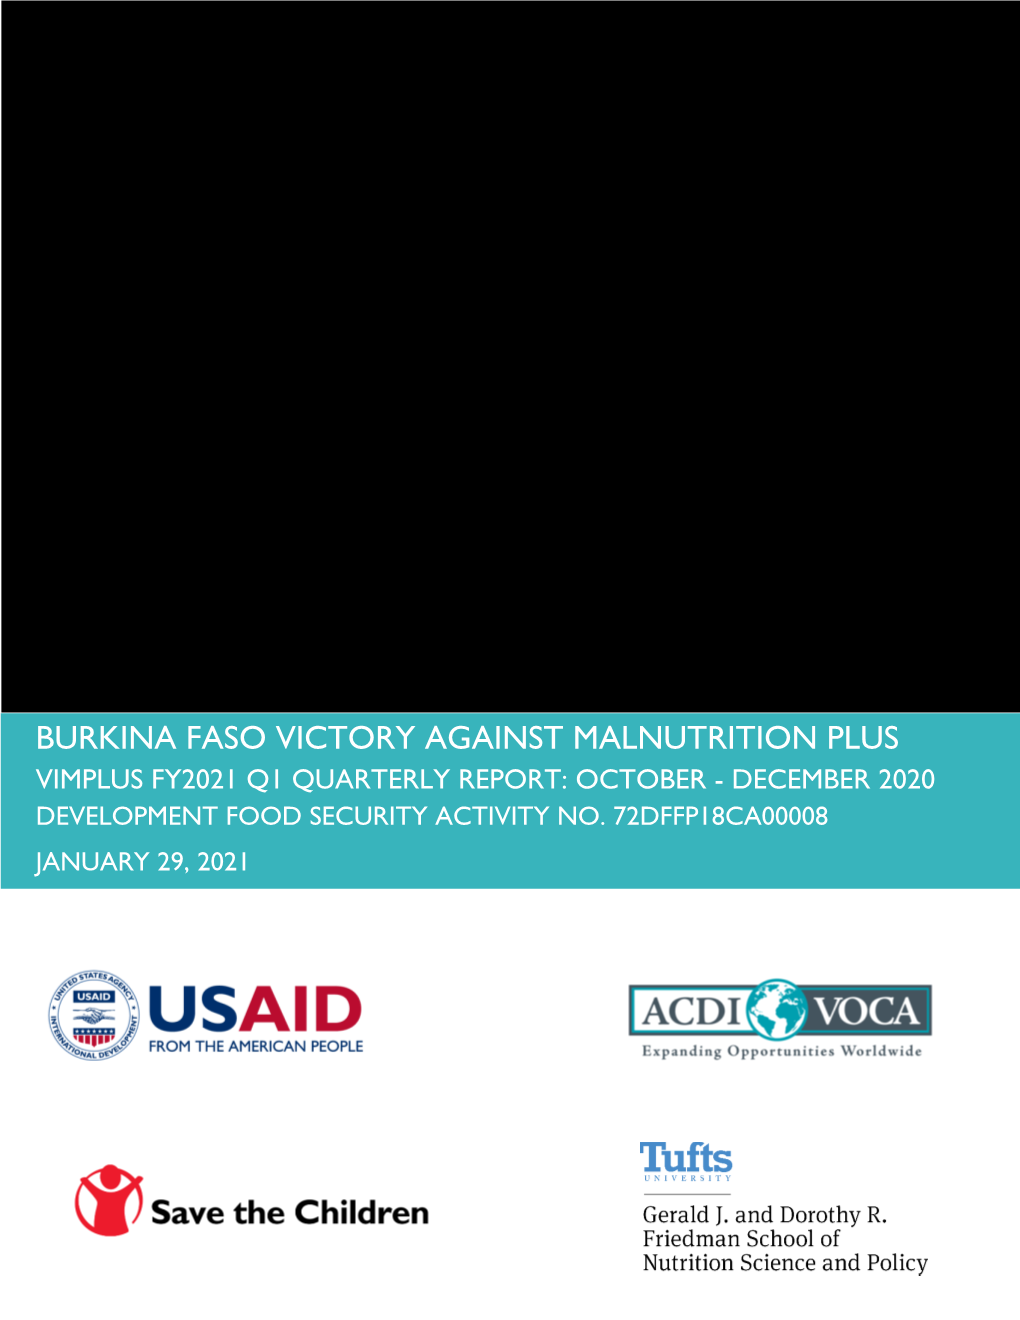 Burkina Faso Victory Against Malnutrition Plus Vimplus Fy2021 Q1 Quarterly Report: October - December 2020 Development Food Security Activity No